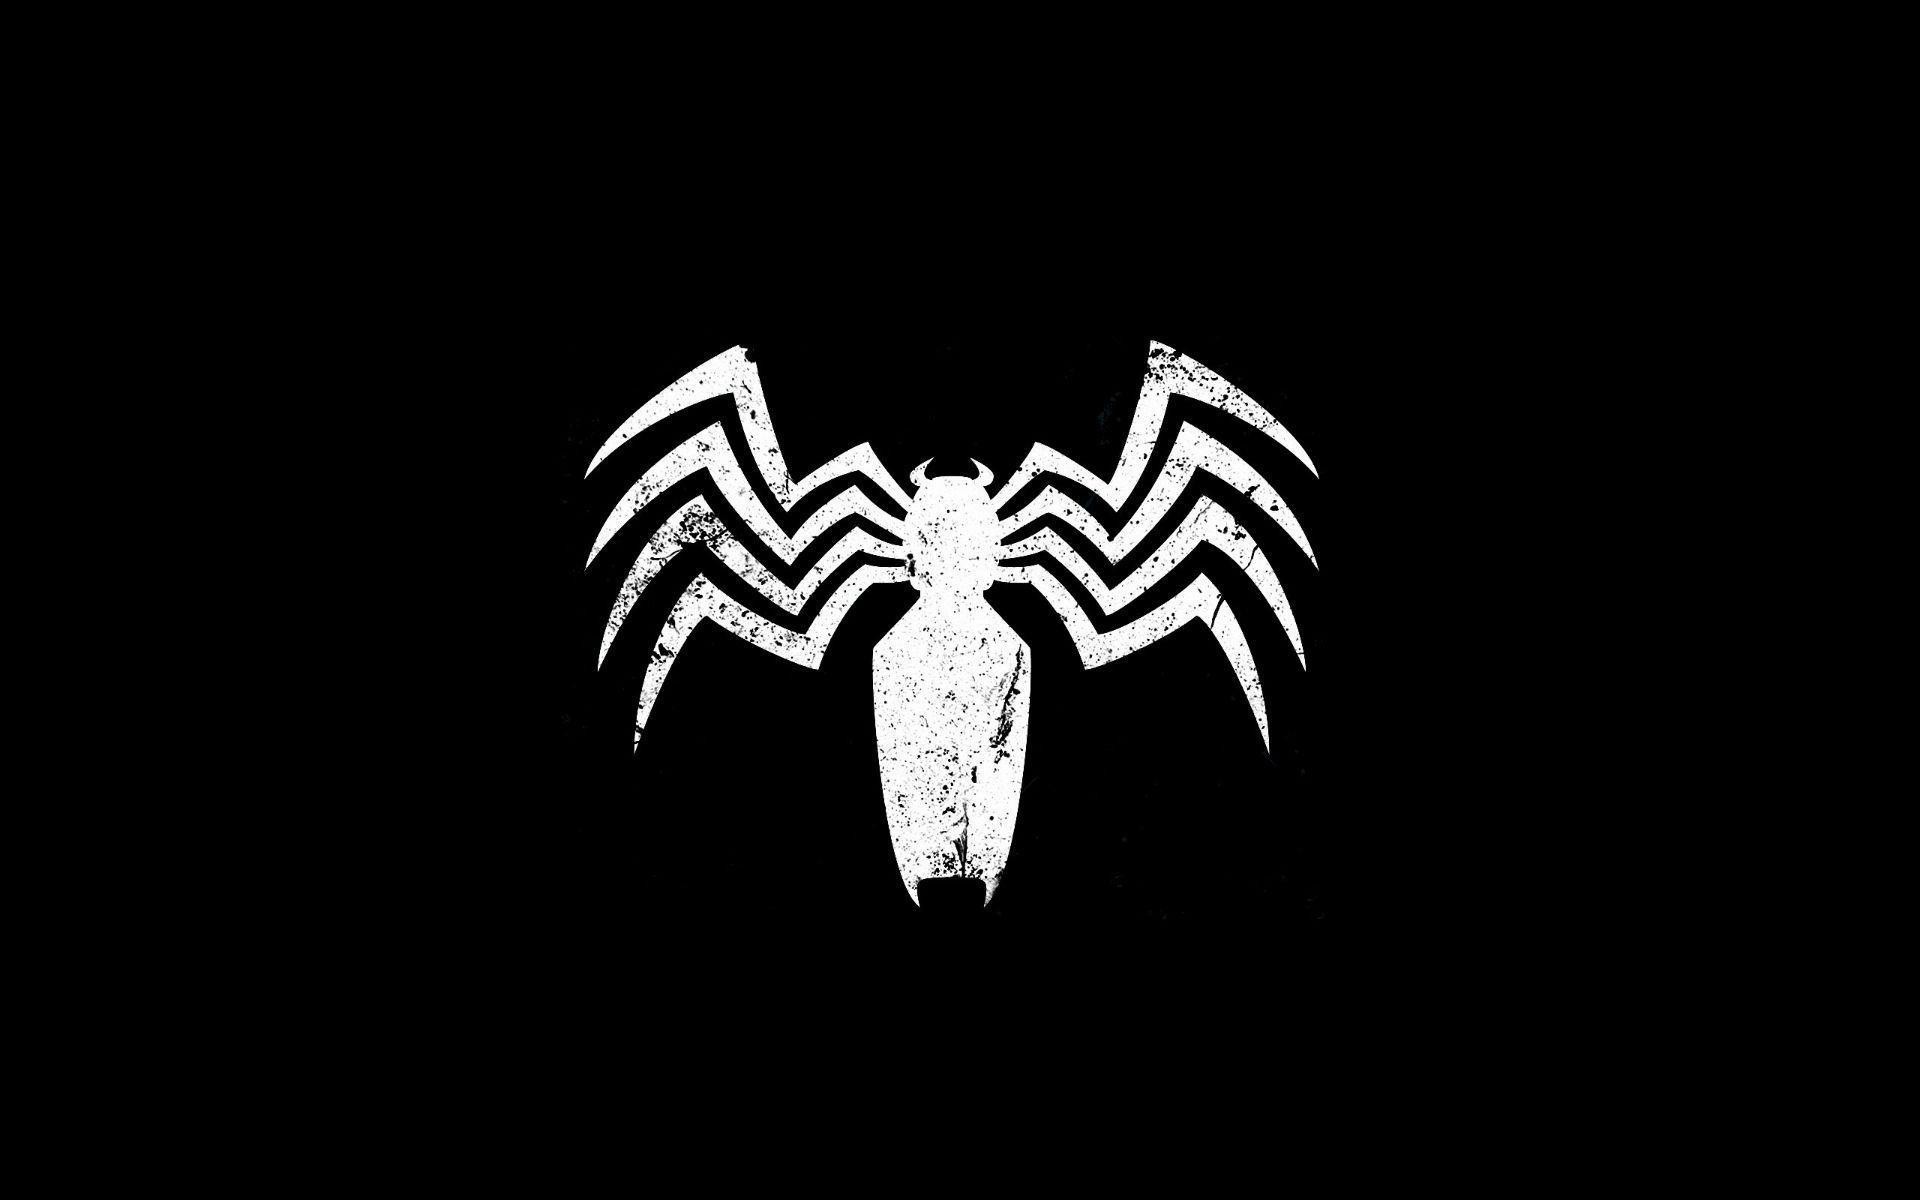 1920x1200 Black Spiderman Wallpapers - Full HD wallpaper search